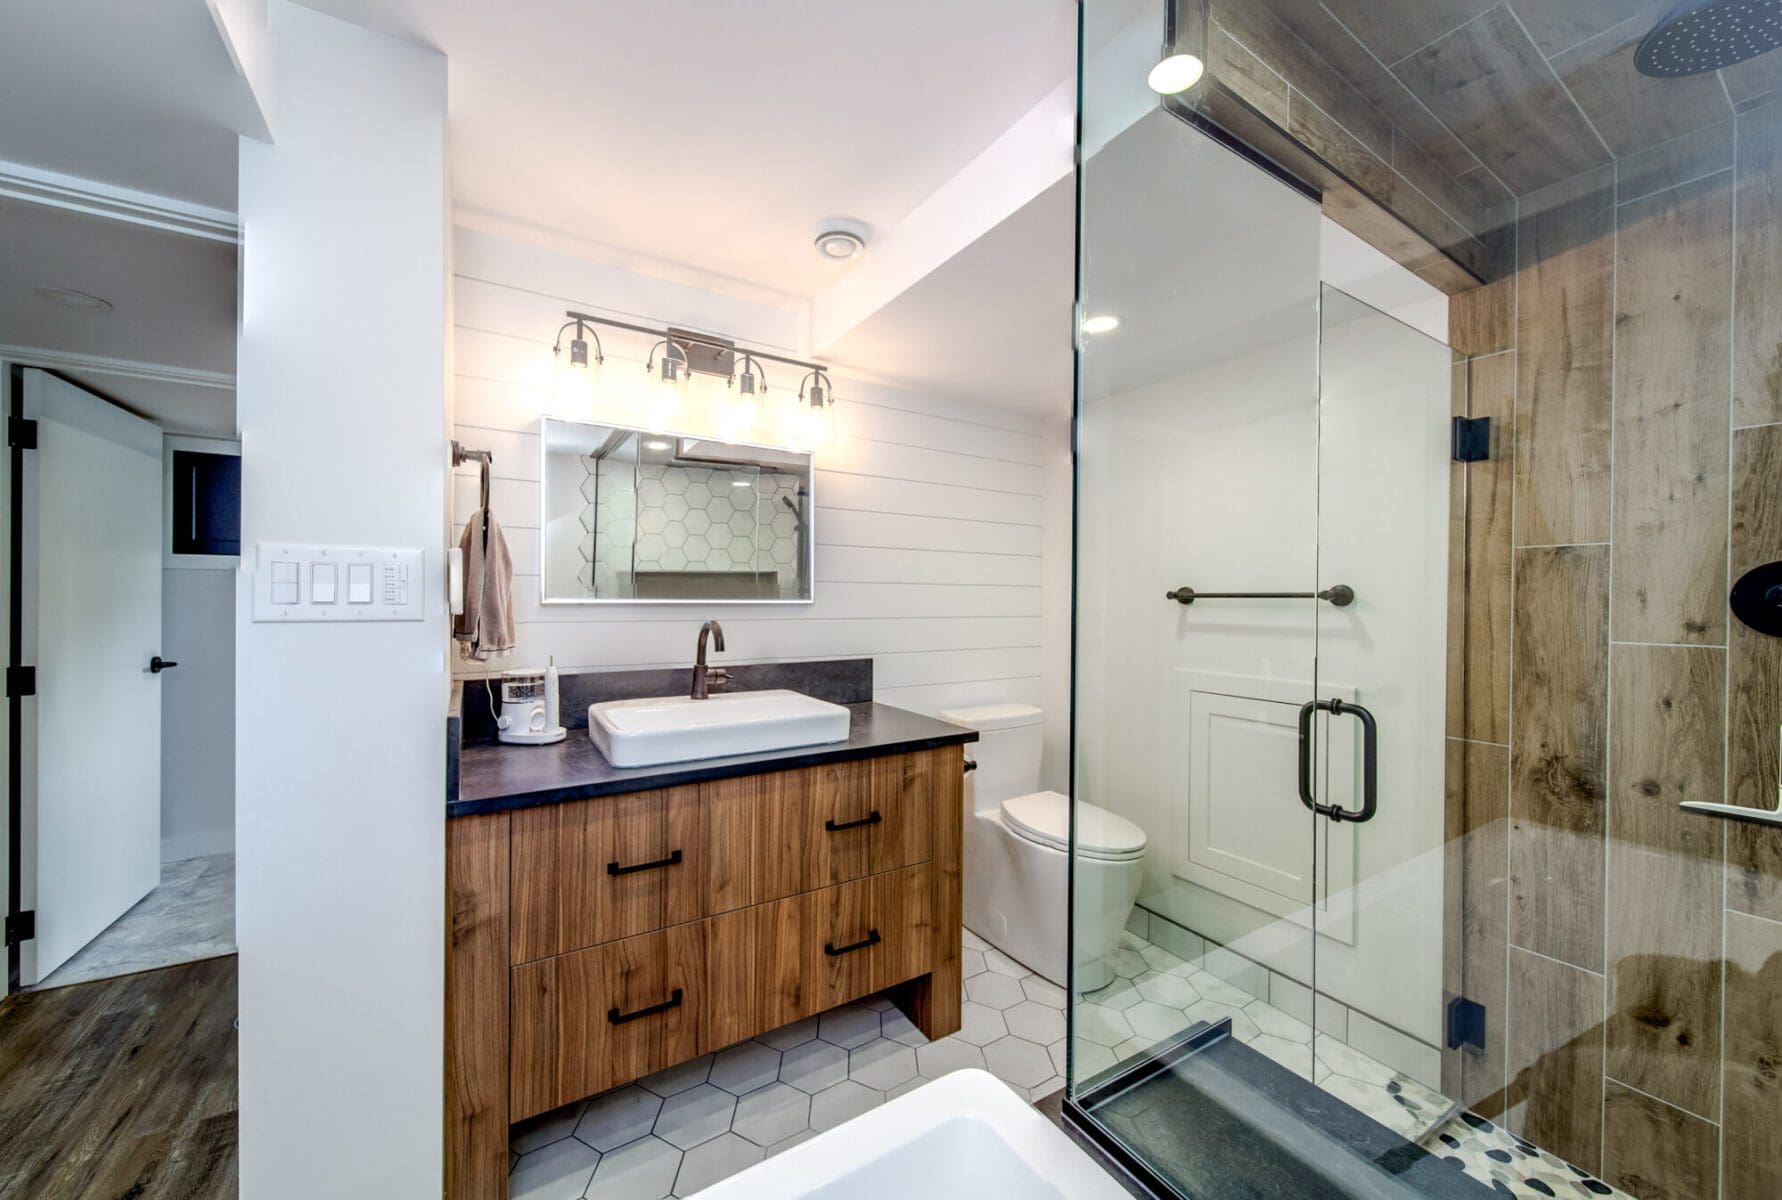 Spa-like bathroom in the basement, Contact Renovations blog